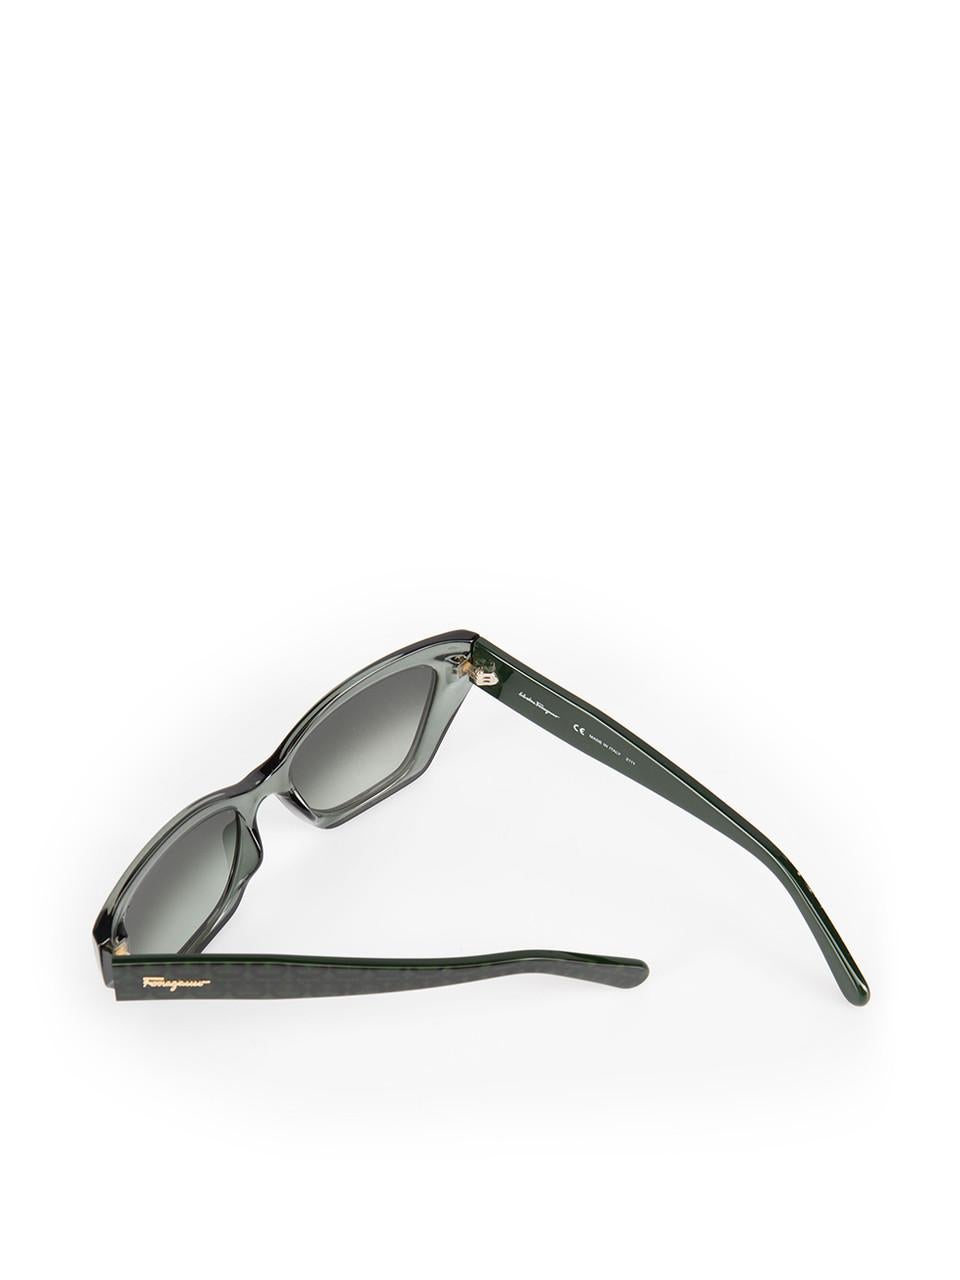 Salvatore Ferragamo Forest Green Transparent Sunglasses For Sale 3